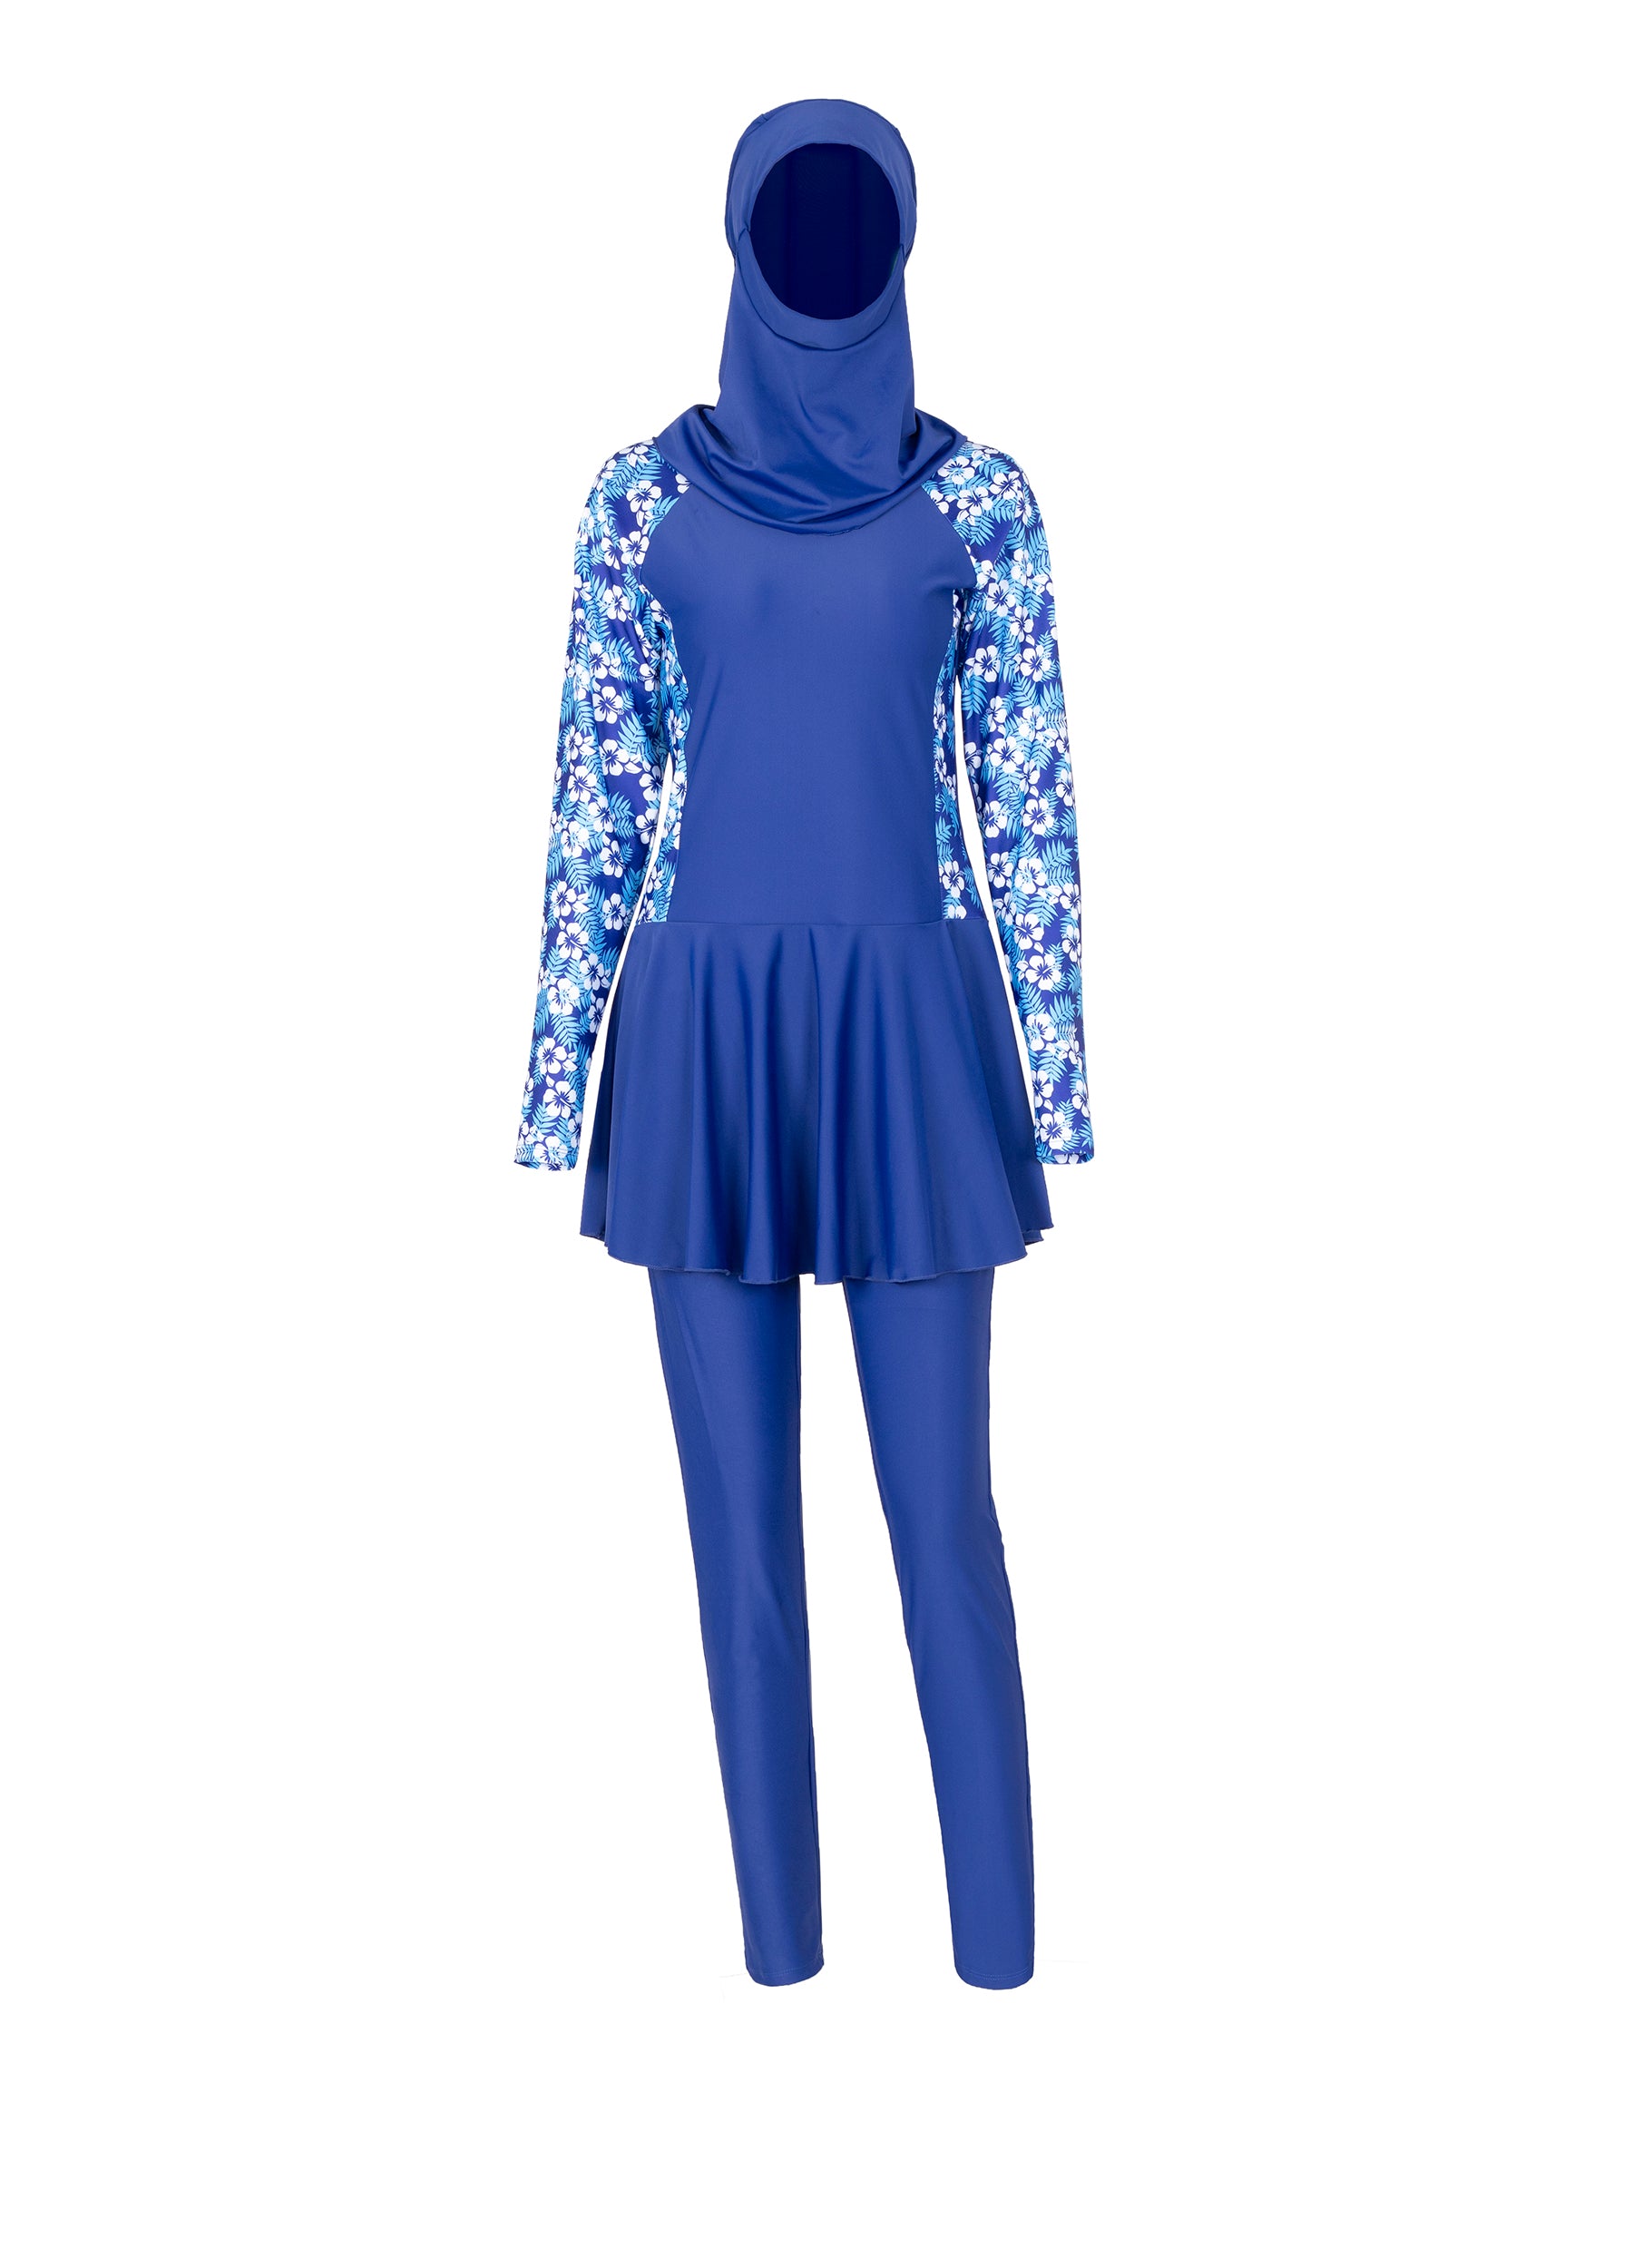 4POSE Women’s Floral Design Sleeve Full Body Burkini Hijab 3-Piece ...